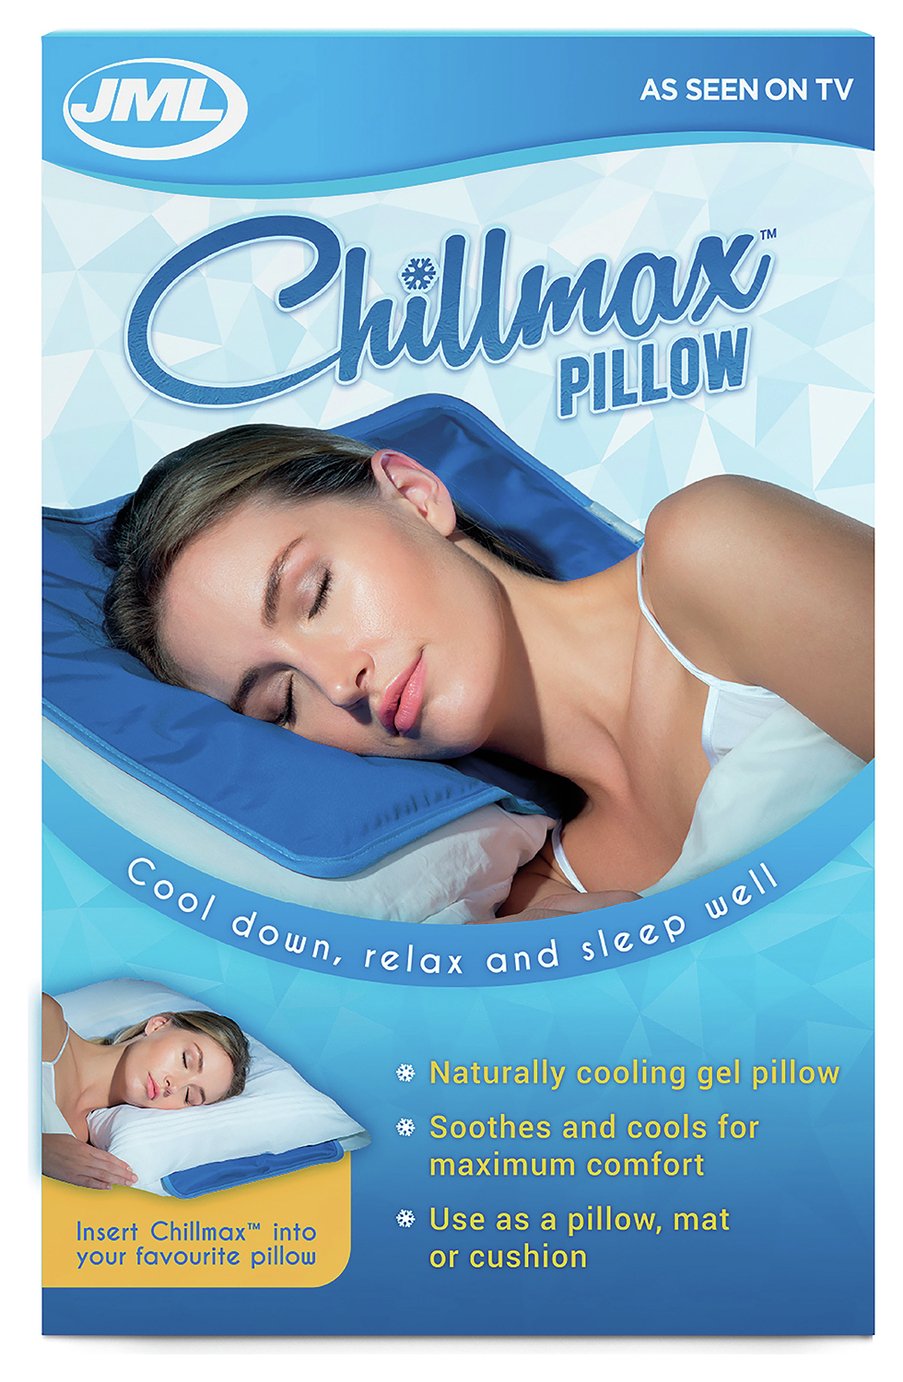 JML Chillmax Pillow Reviews